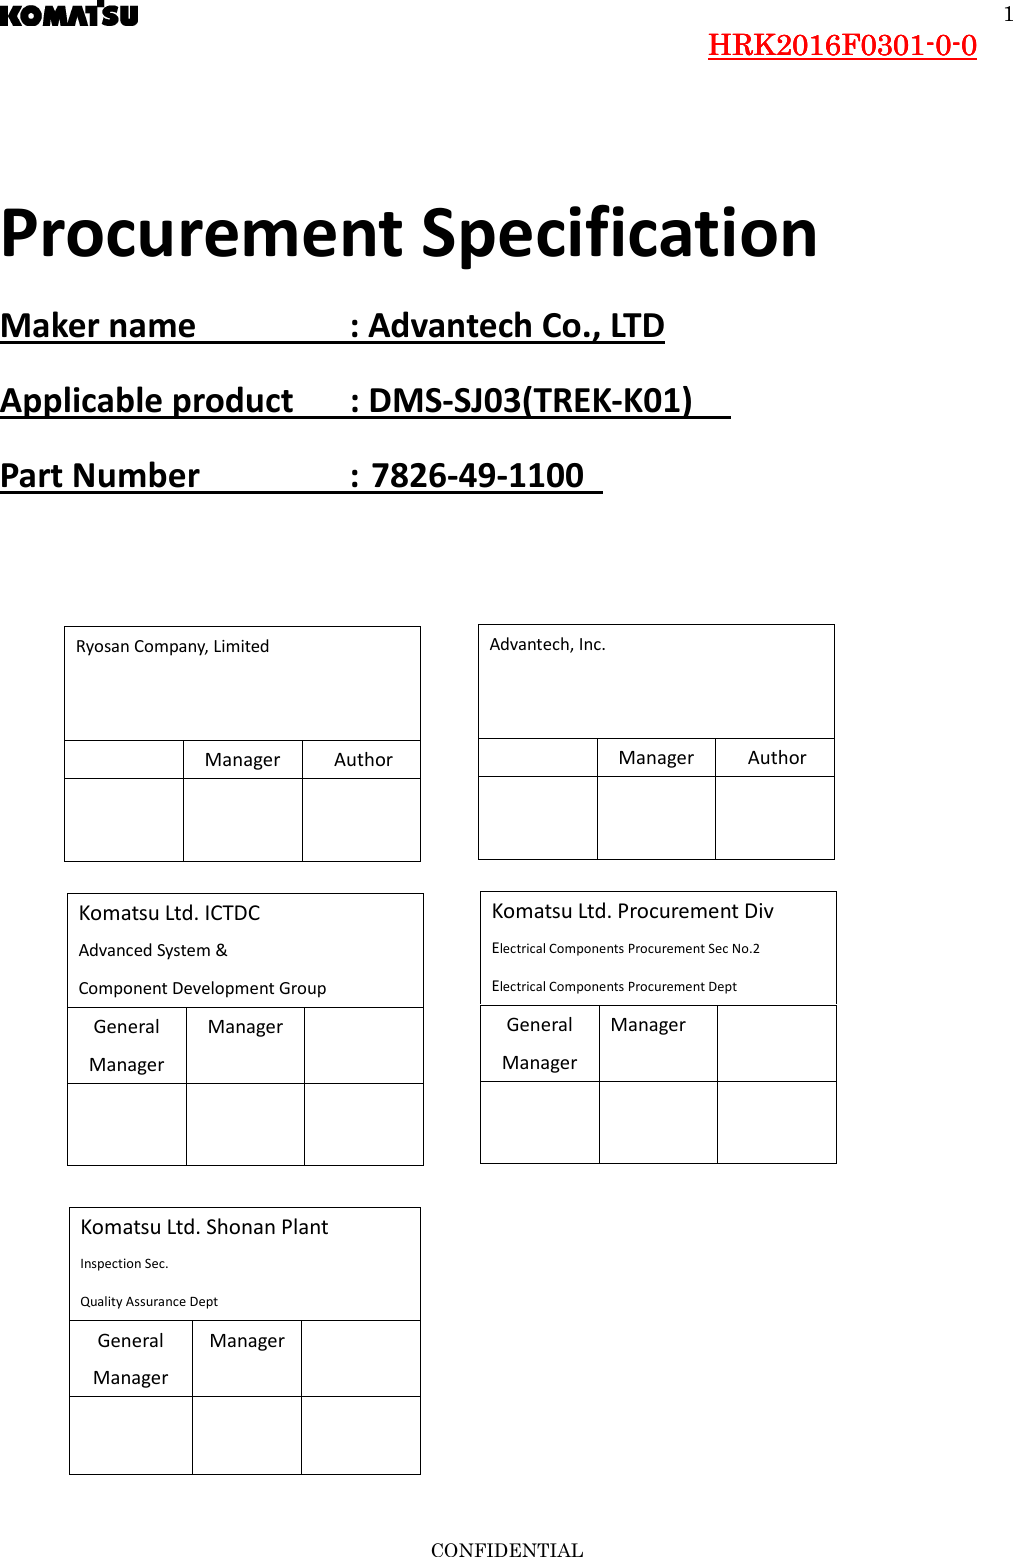  HRK201HRK201HRK201HRK2016666F0301F0301F0301F0301----0000----0000    CONFIDENTIAL 1  Procurement Specification Maker name    : Advantech Co., LTD Applicable product  : DMS-SJ03(TREK-K01)     Part Number    : 7826-49-1100                Ryosan Company, Limited     Manager  Author      Advantech, Inc.     Manager  Author      Komatsu Ltd. ICTDC   Advanced System &amp;   Component Development Group General Manager Manager     Komatsu Ltd. Procurement Div Electrical Components Procurement Sec No.2 Electrical Components Procurement Dept General Manager Manager      Komatsu Ltd. Shonan Plant Inspection Sec. Quality Assurance Dept General Manager Manager       